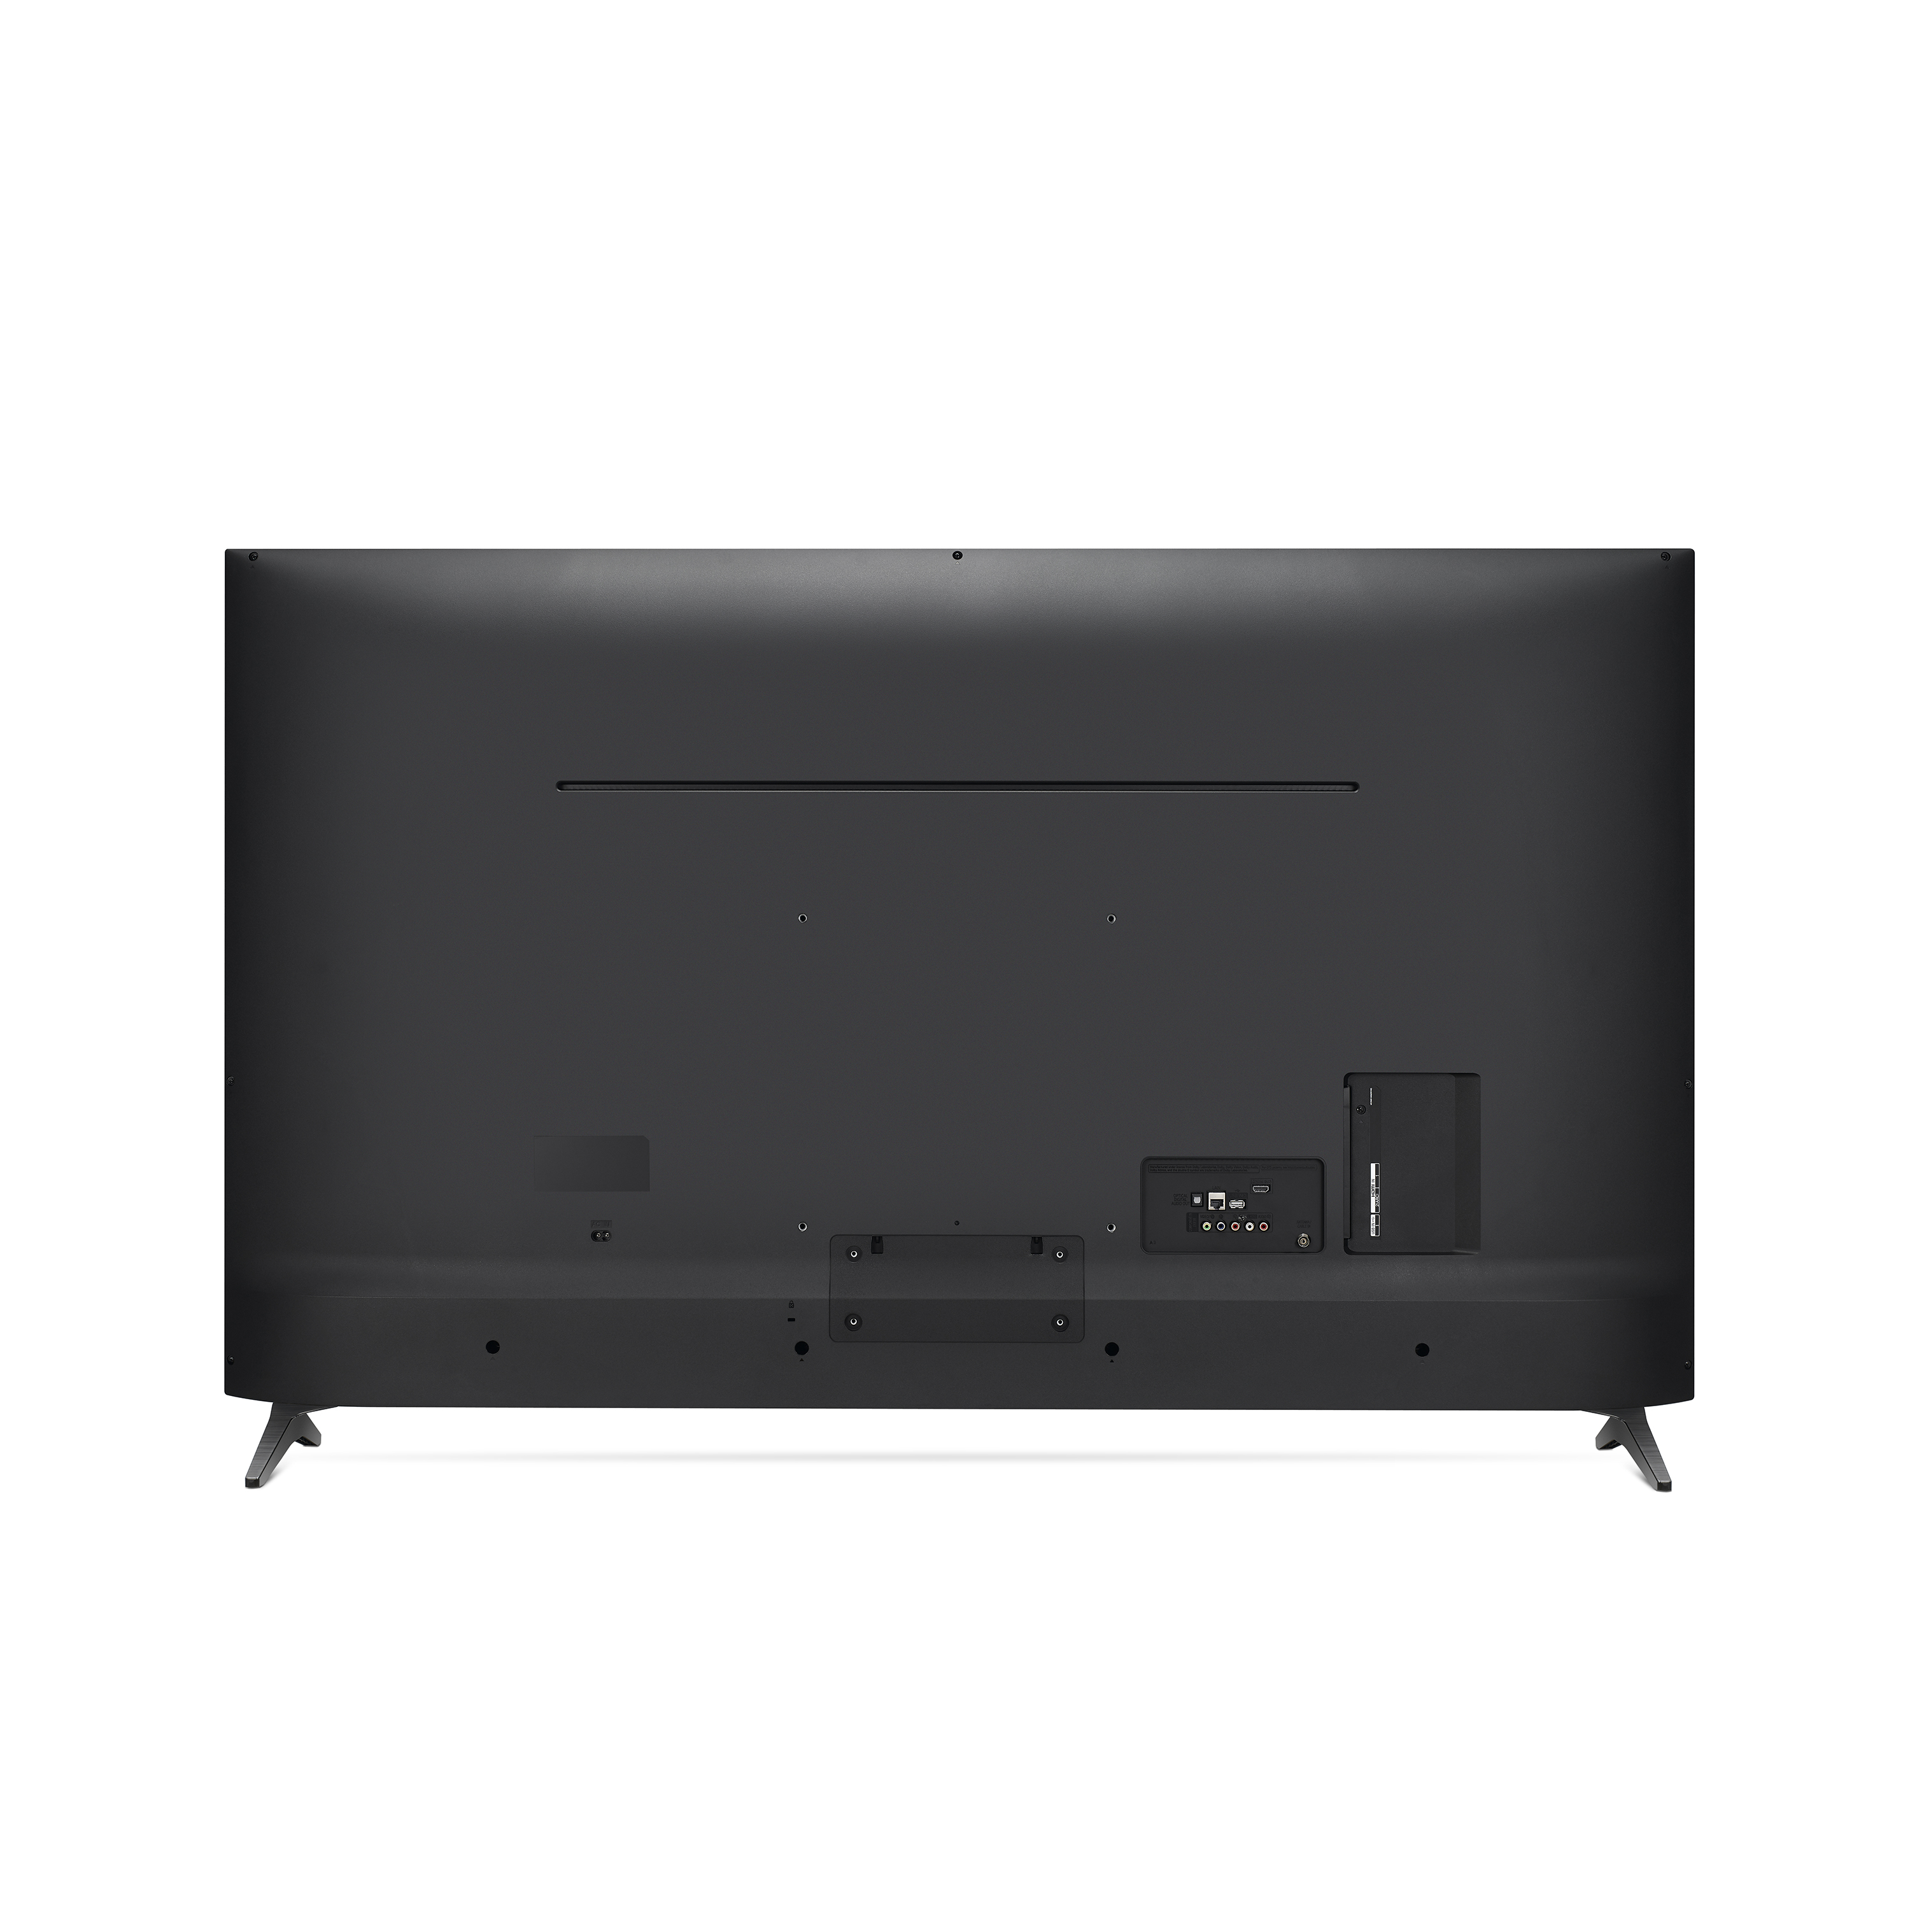 LG 65" Class 4K UHD 2160p LED Smart TV With HDR 65UM6900PUA - image 5 of 14